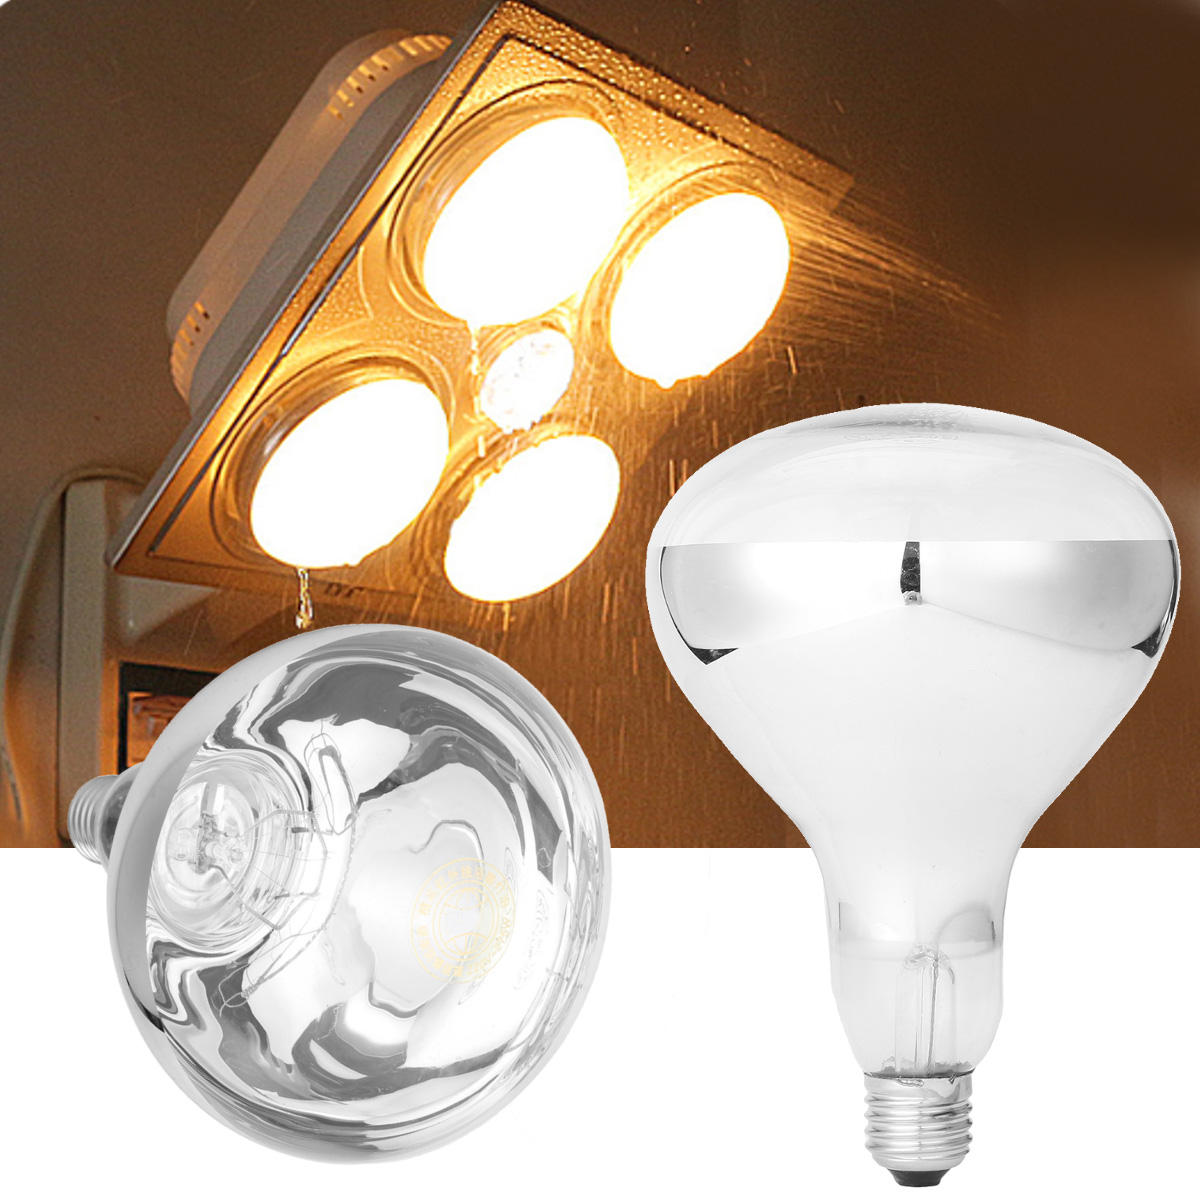 E27 275w Infrared Heat Bulb For Ceiling Exhaust Fan Bathroom